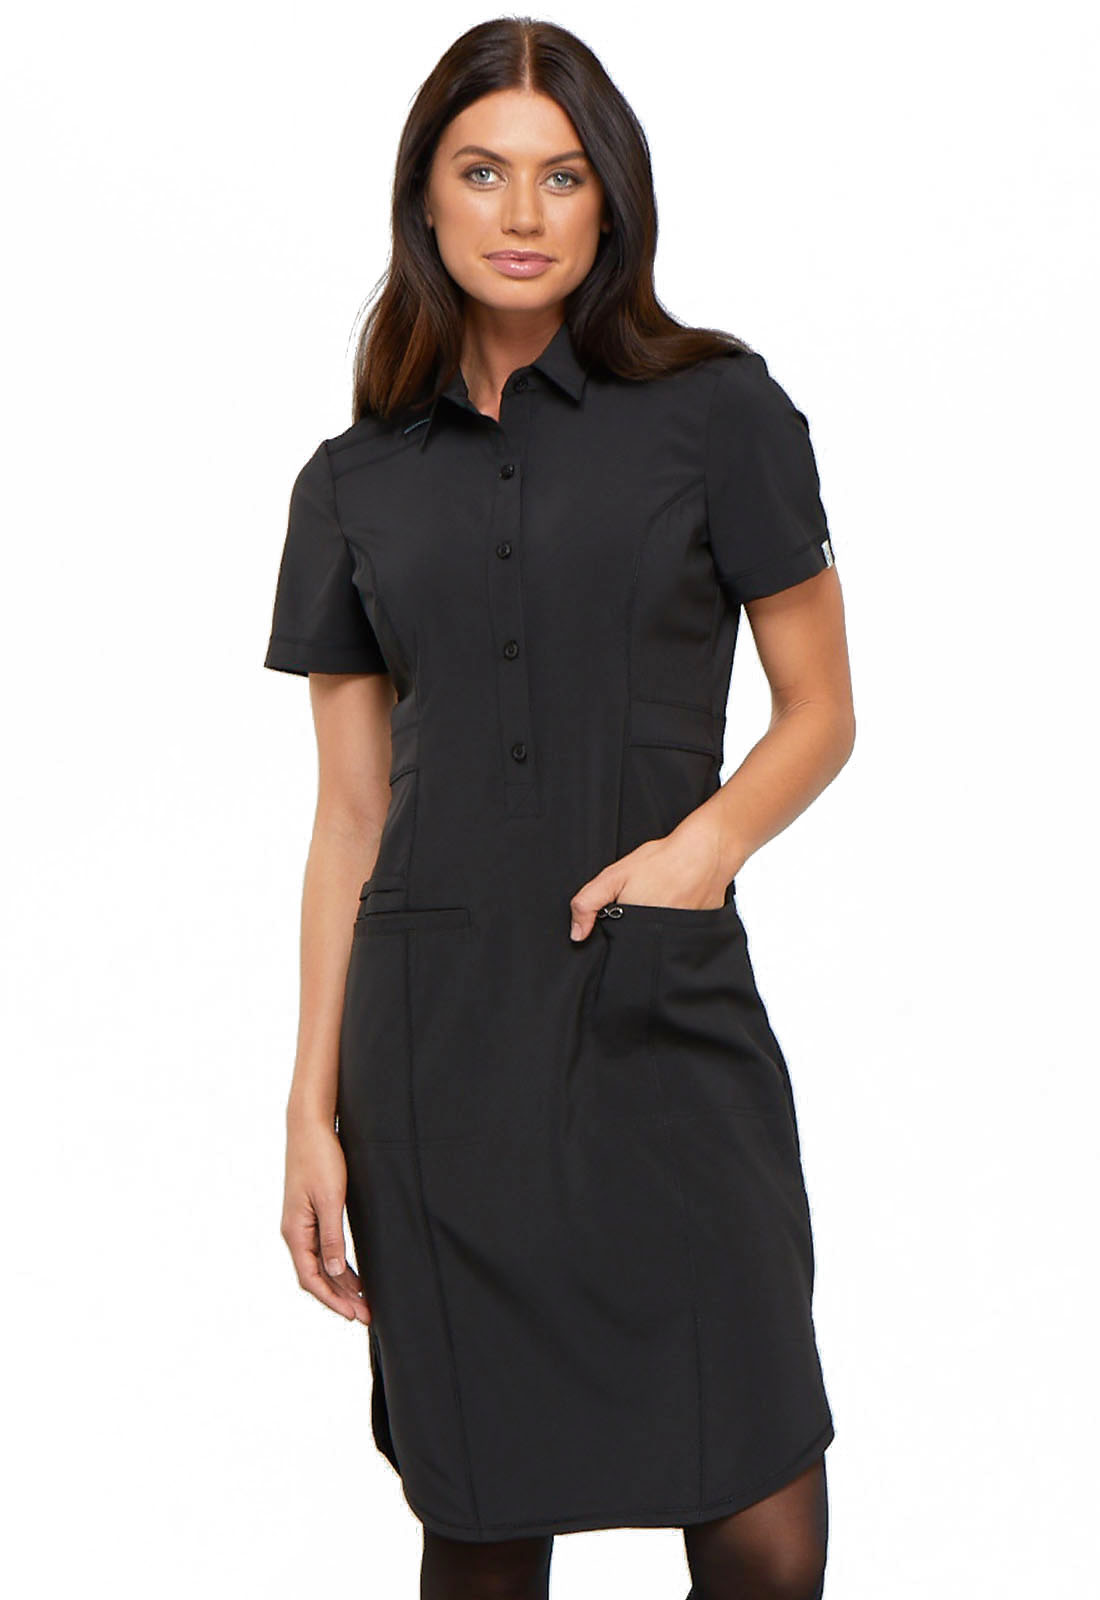 WW500 Cherokee Workwear Professionals Women's Zip Button Front Dress